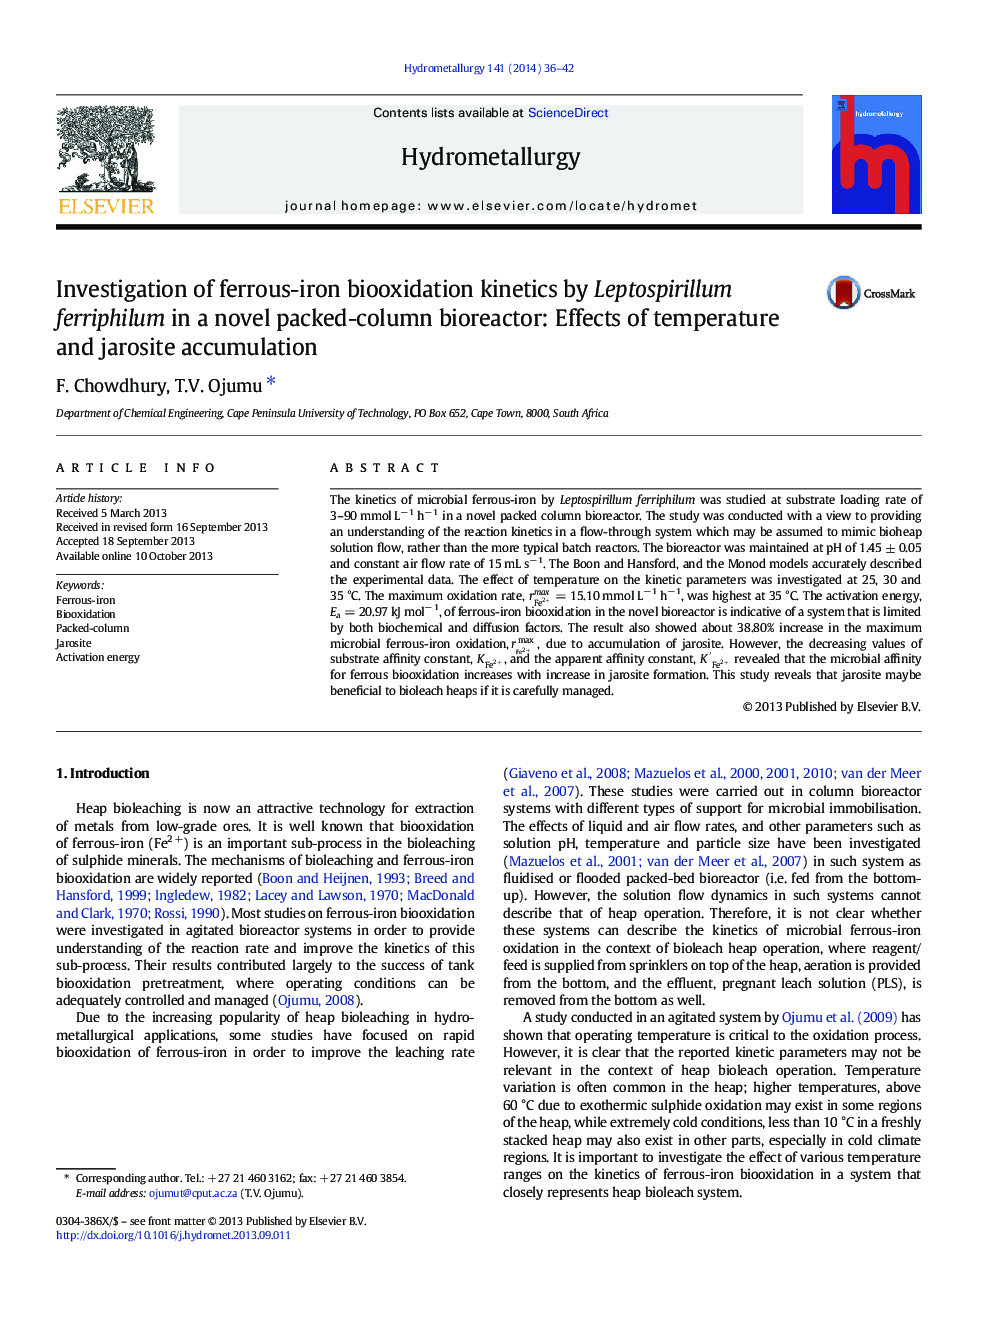 Investigation of ferrous-iron biooxidation kinetics by Leptospirillum ferriphilum in a novel packed-column bioreactor: Effects of temperature and jarosite accumulation